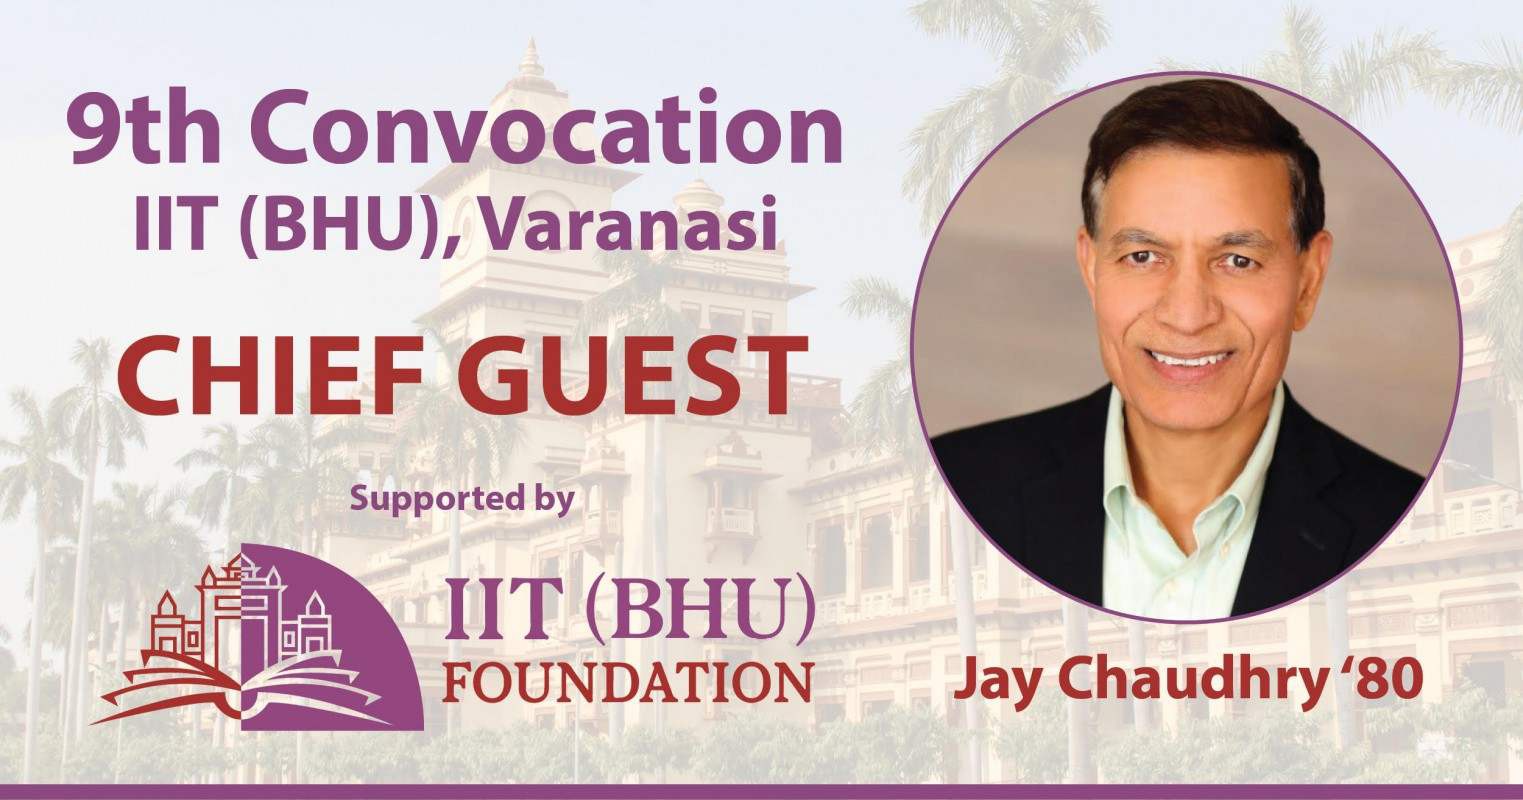 Jay Chaudhry ’80 to Speak at 9th Convocation of IIT (BHU), Varanasi